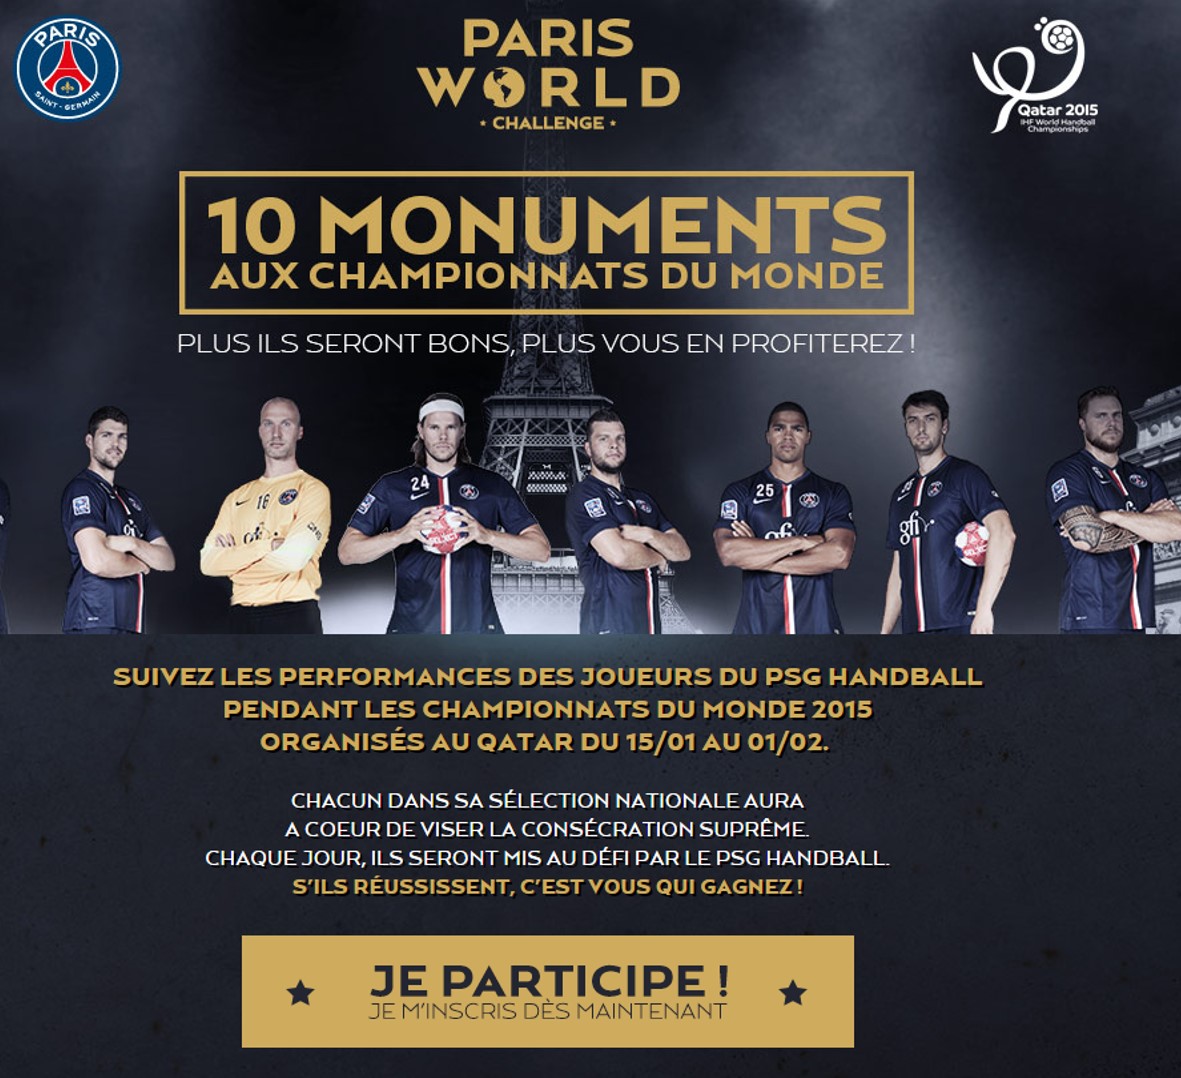 PARIS WORLD CHALLENGE - PSG HAND 2015 Qatar Visuel retravaillé - Go with the Blog